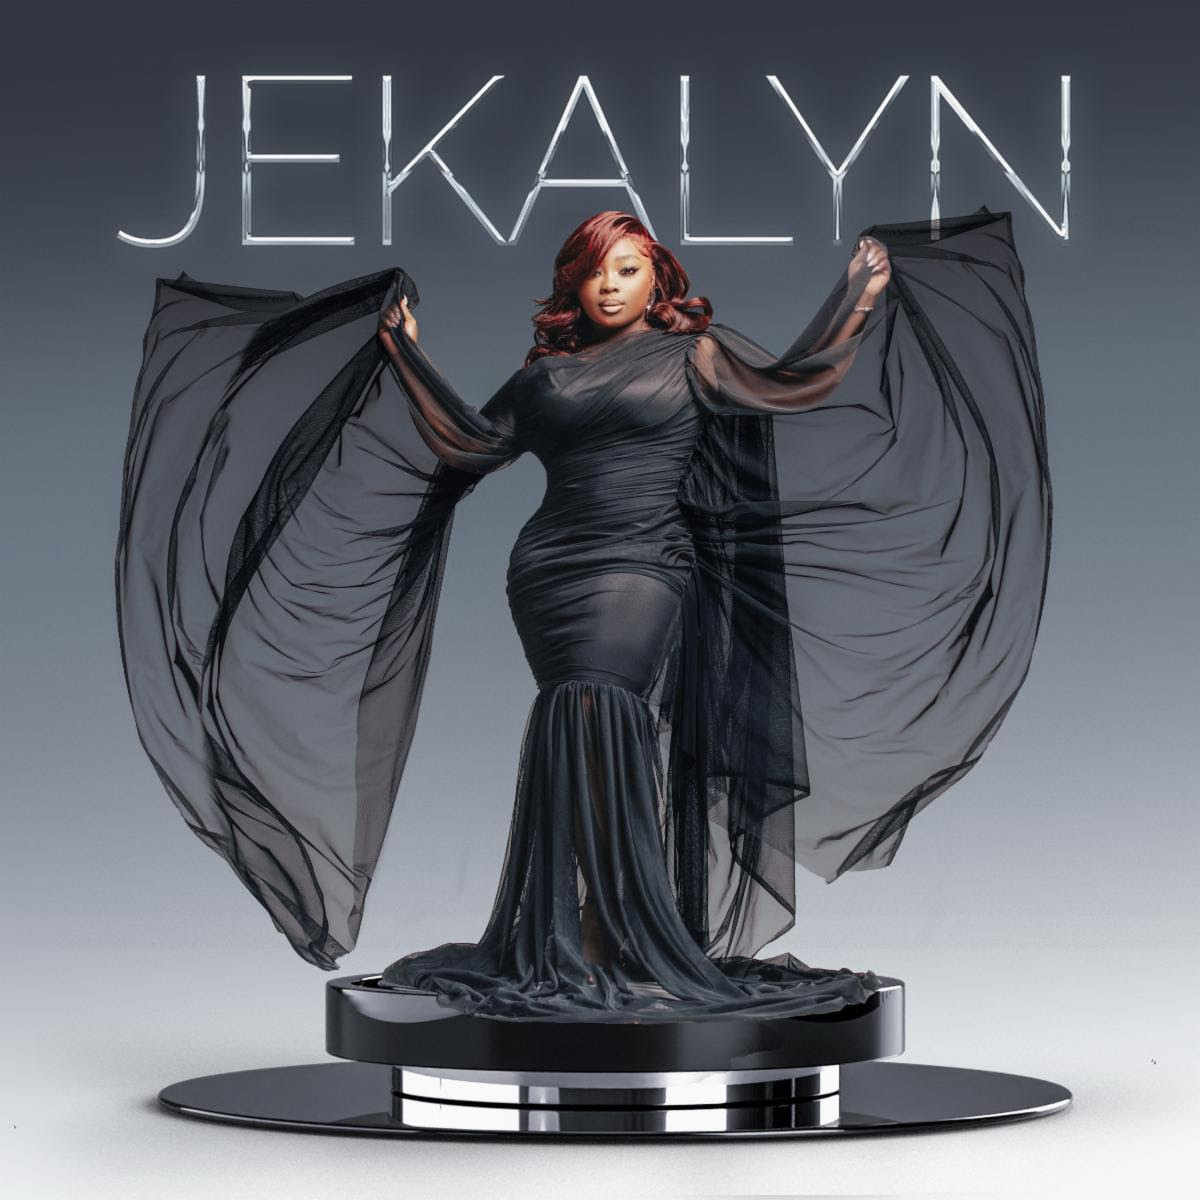 JEKALYN CARR ANNOUNCES LONG-AWAITED NEW SELF-TITLED ALBUM, JEKALYN